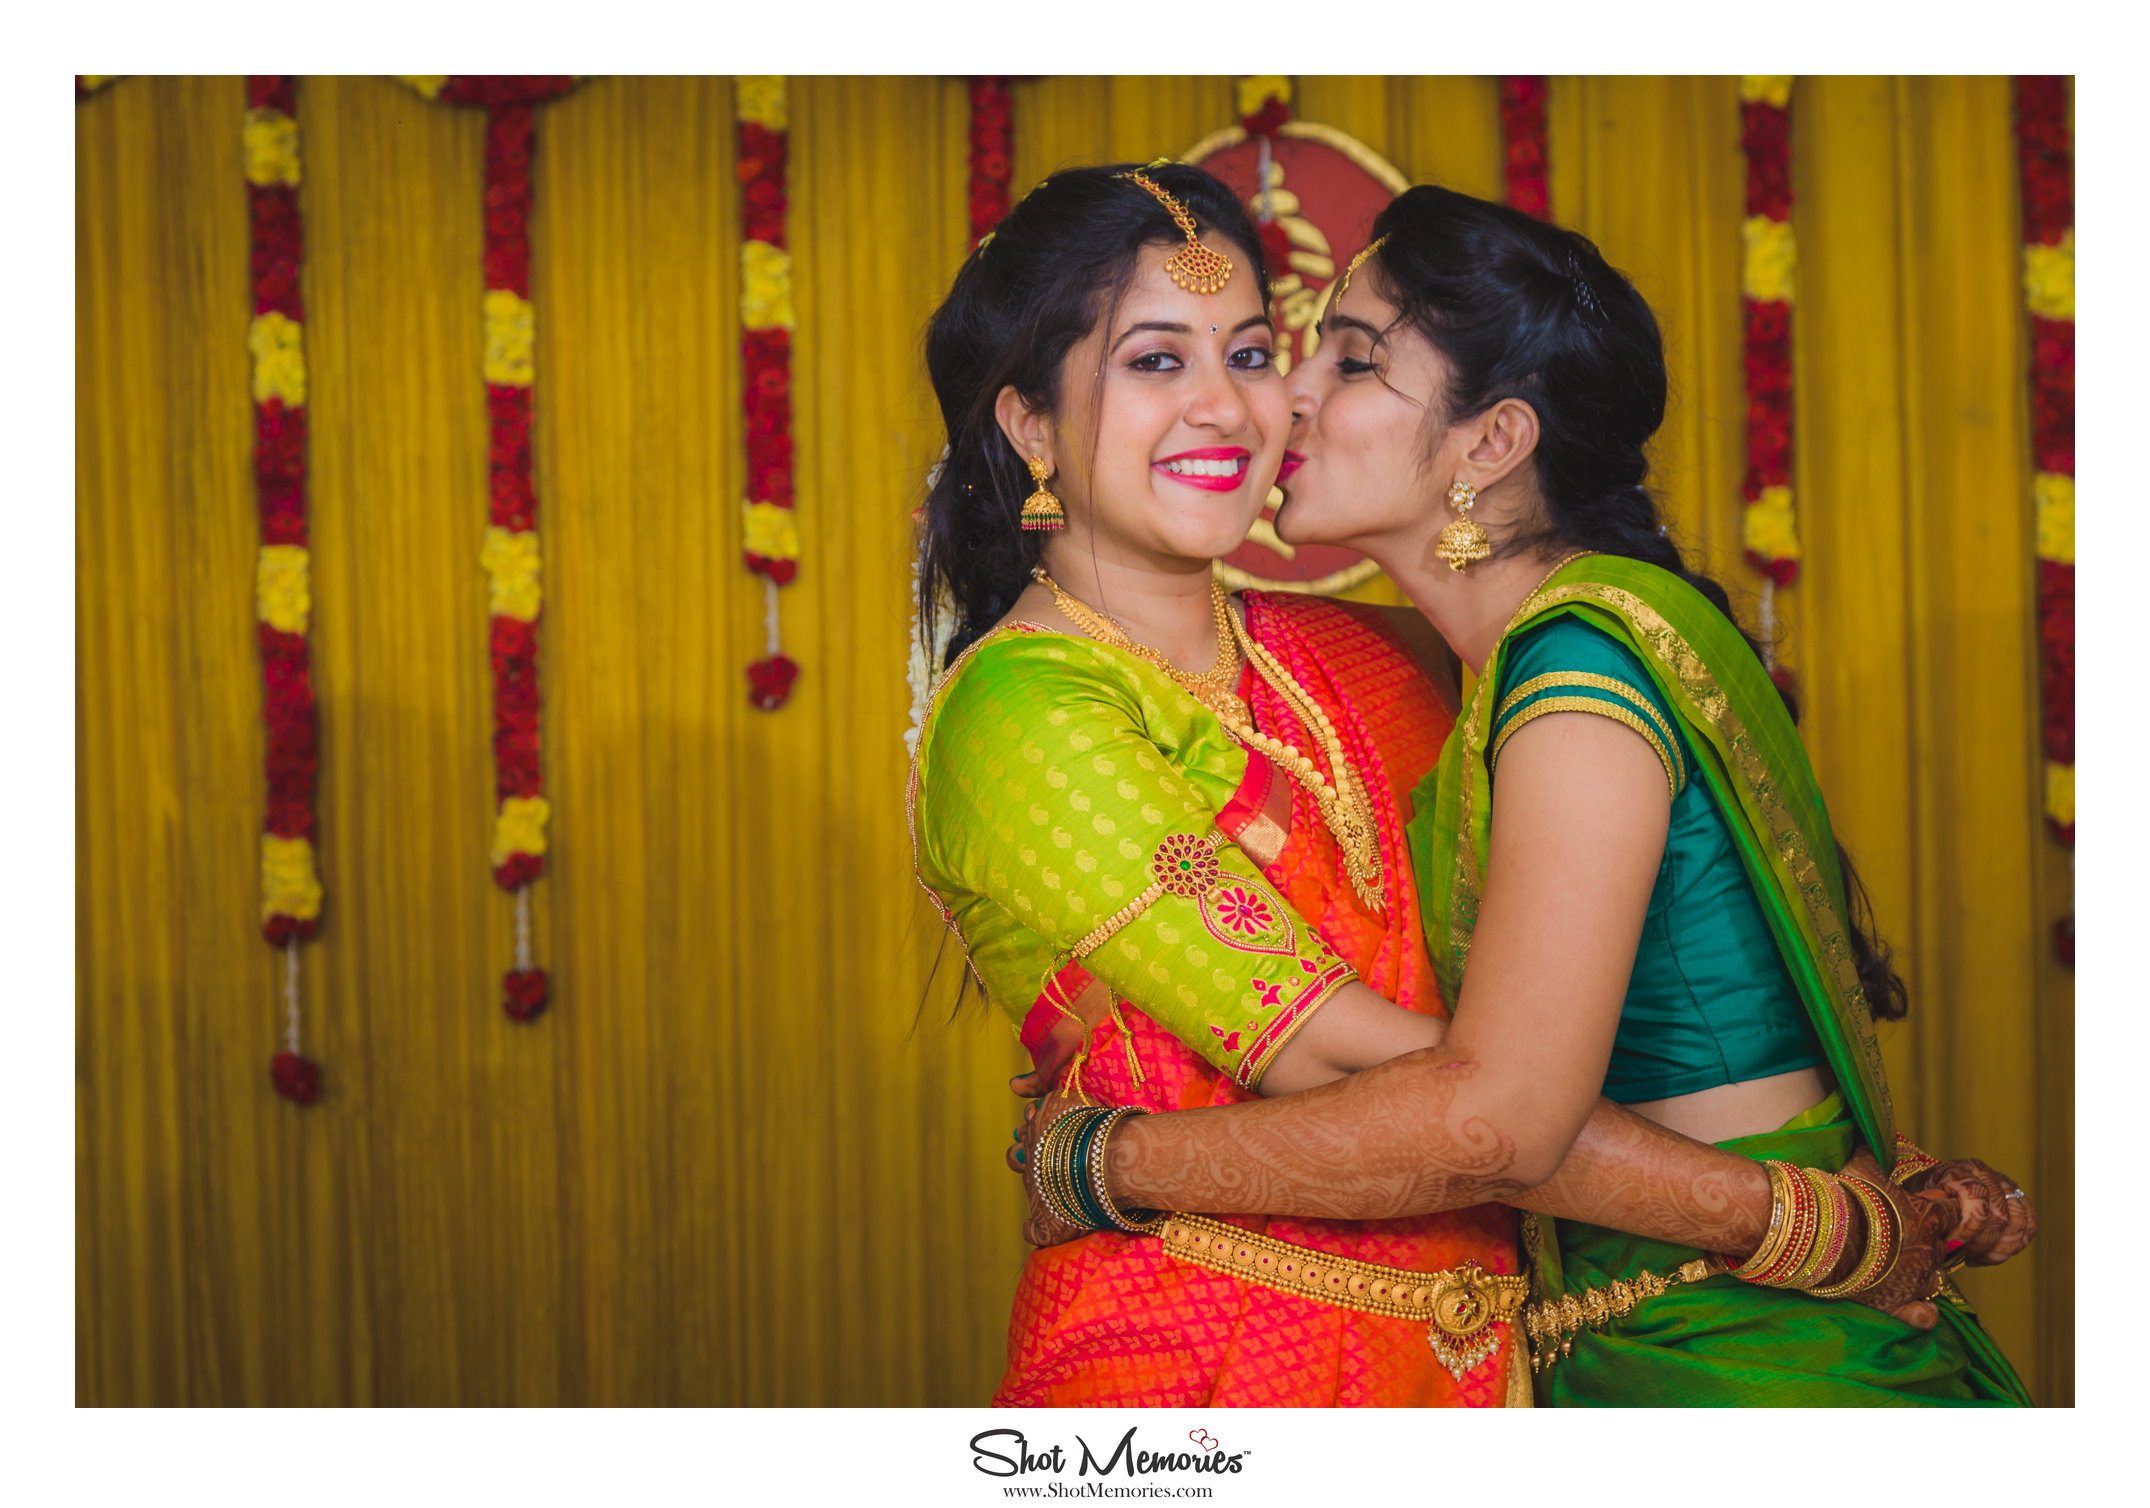 Best Engagement Photography in Chennai - Shot Memories